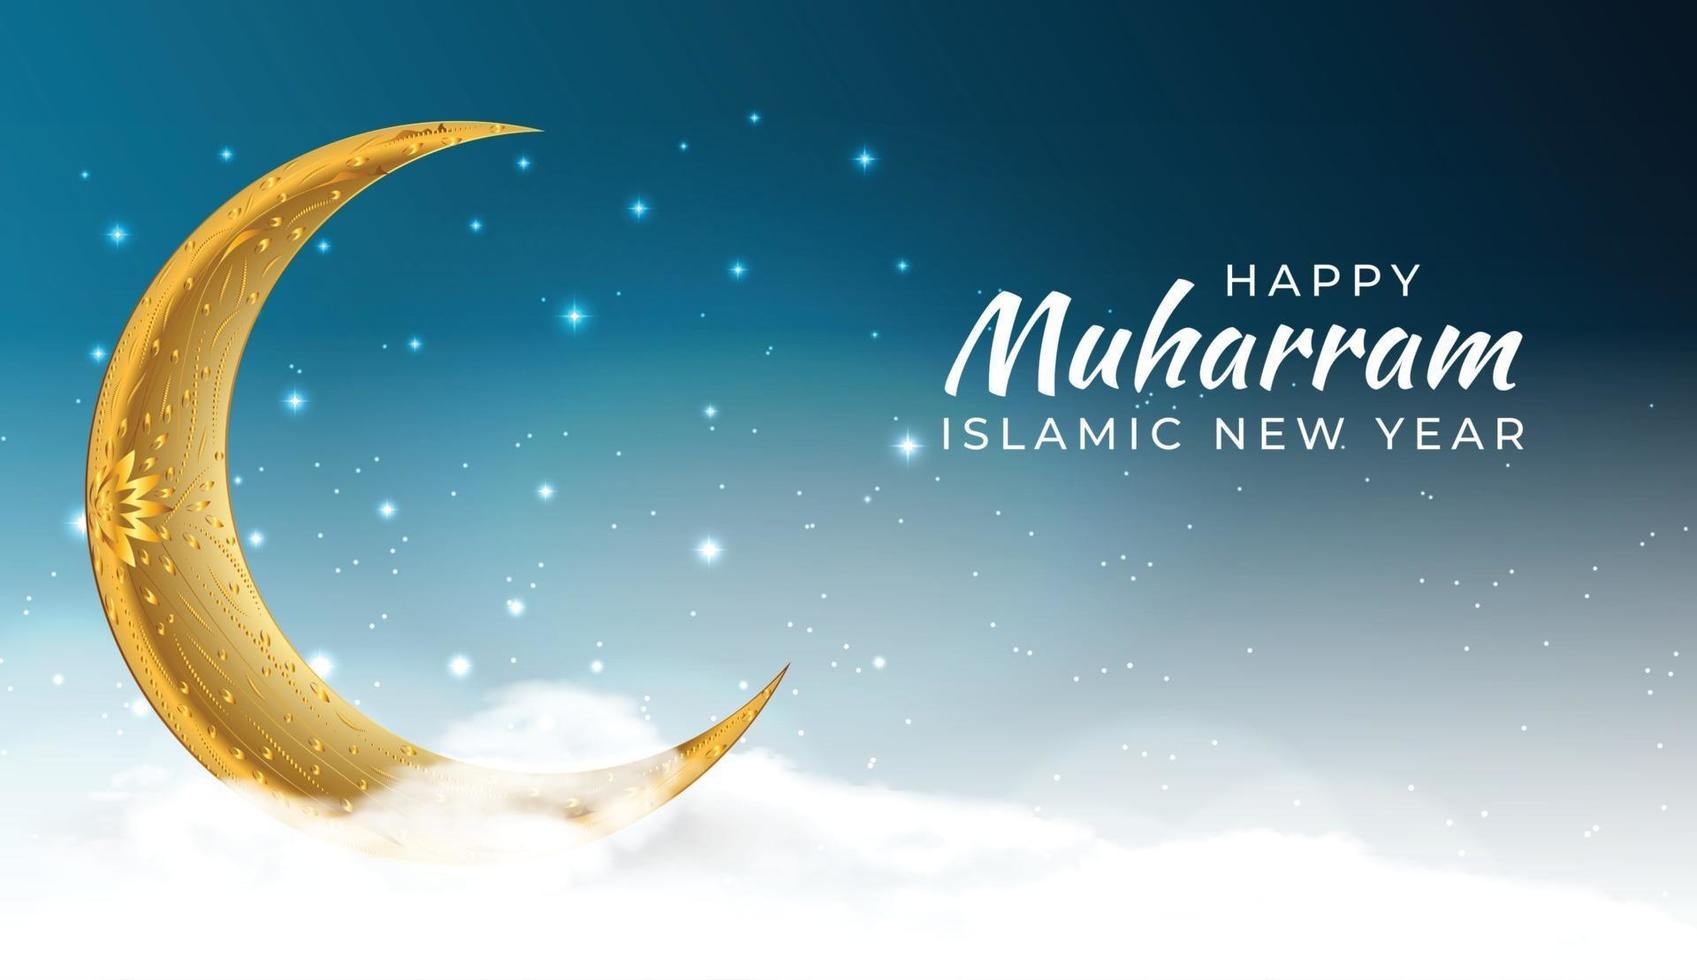 Islamic new year designgrIslamic new year design greeting card ...